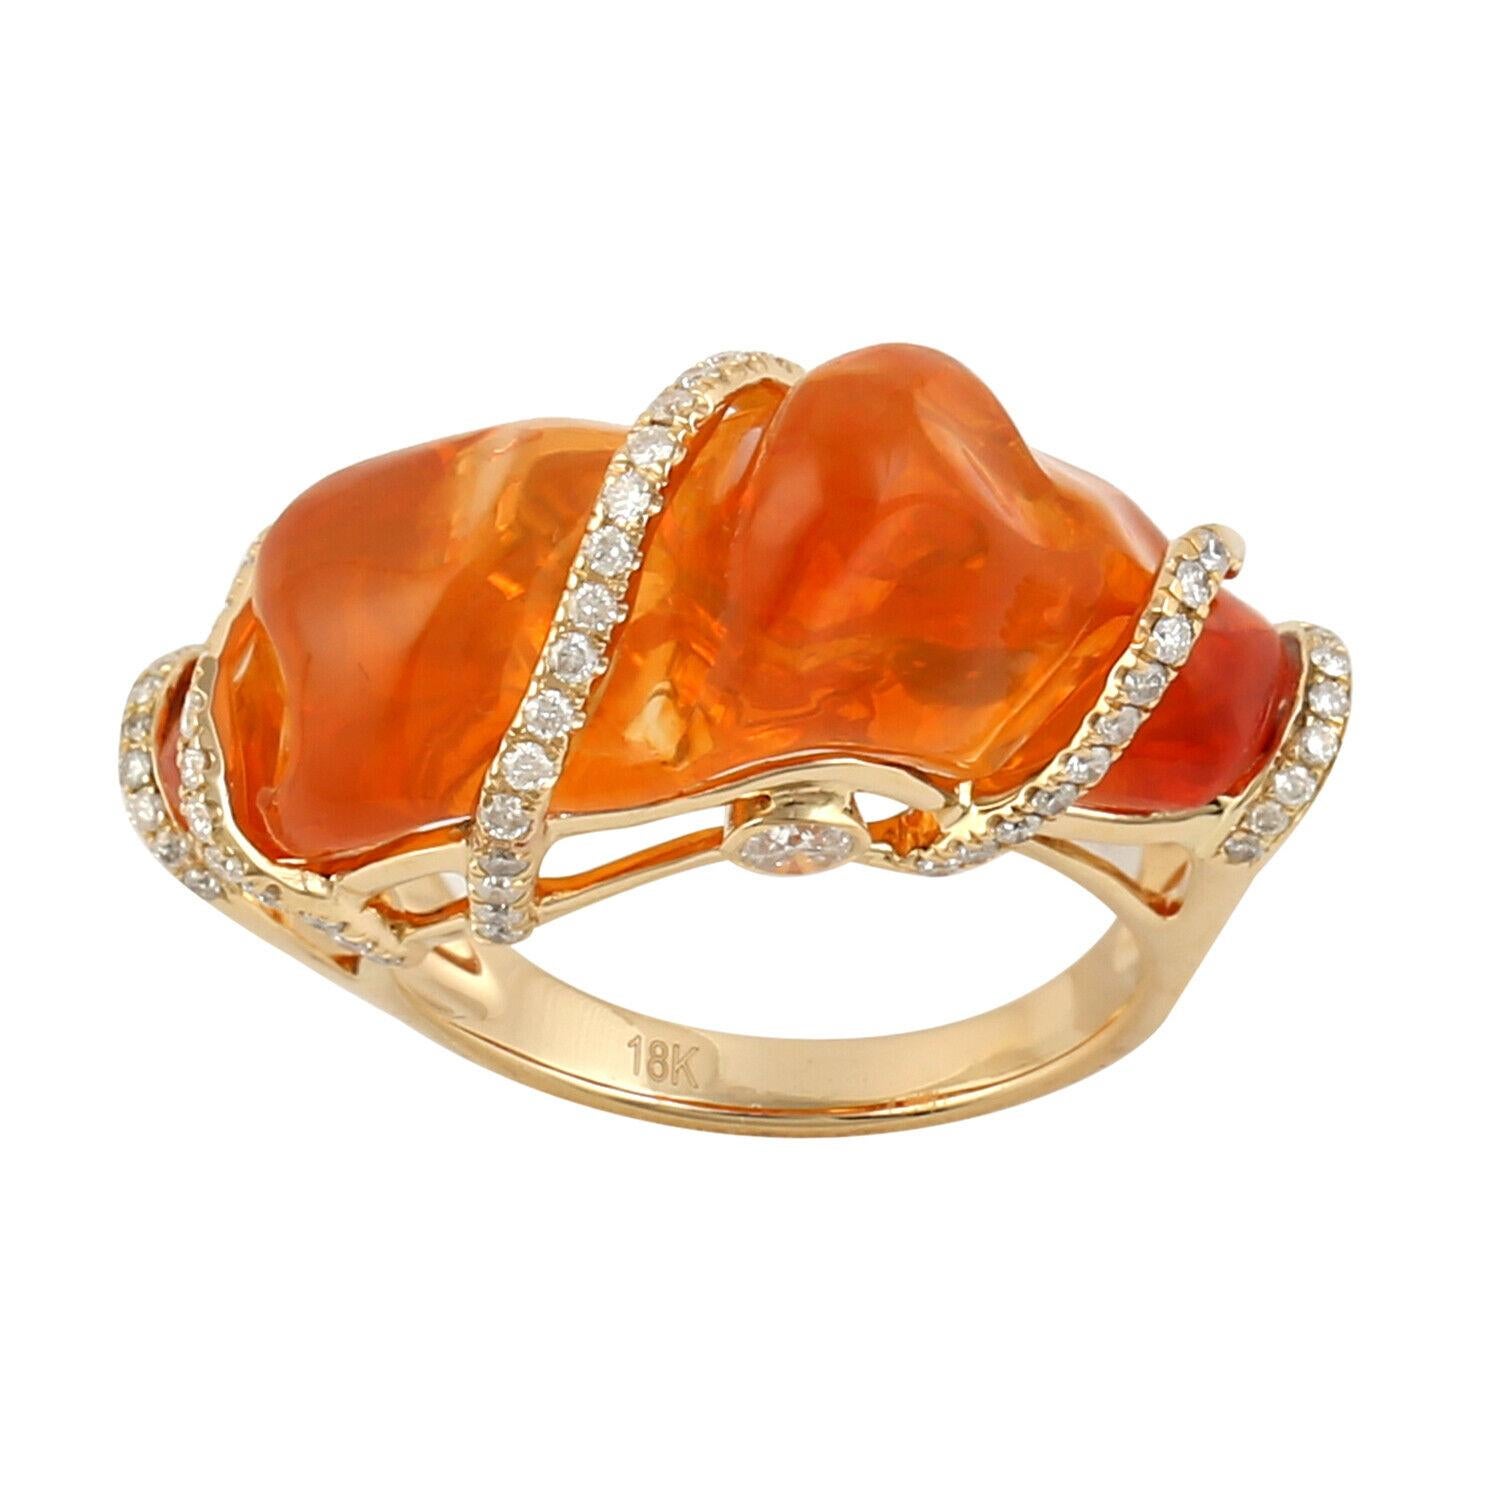 Mixed Cut Meghna Jewels 14.19 carat Fire Opal Diamond 18k Yellow Gold Diamond Ring For Sale